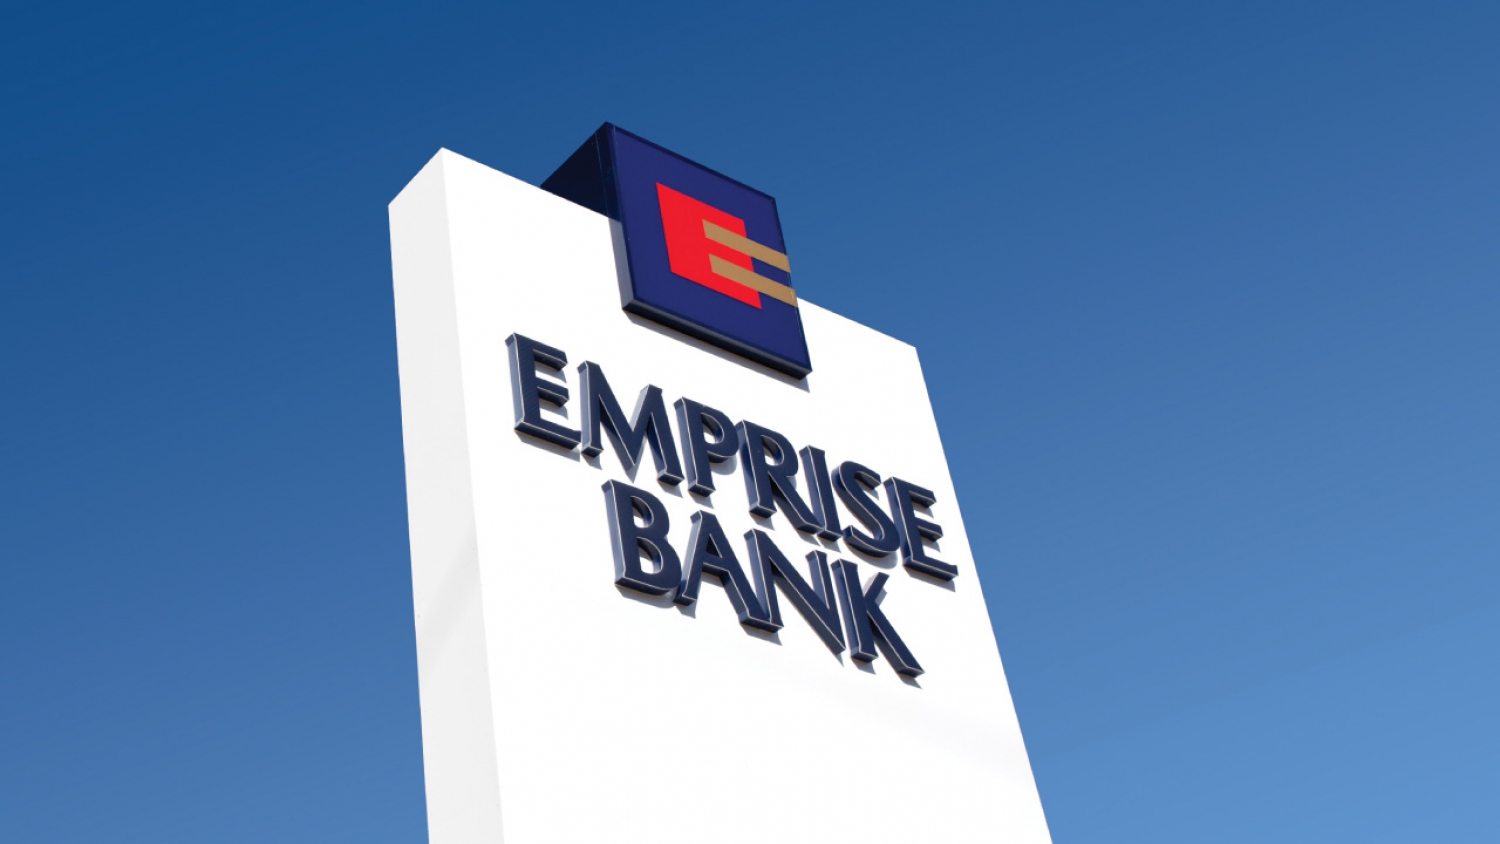 Emprise Bank